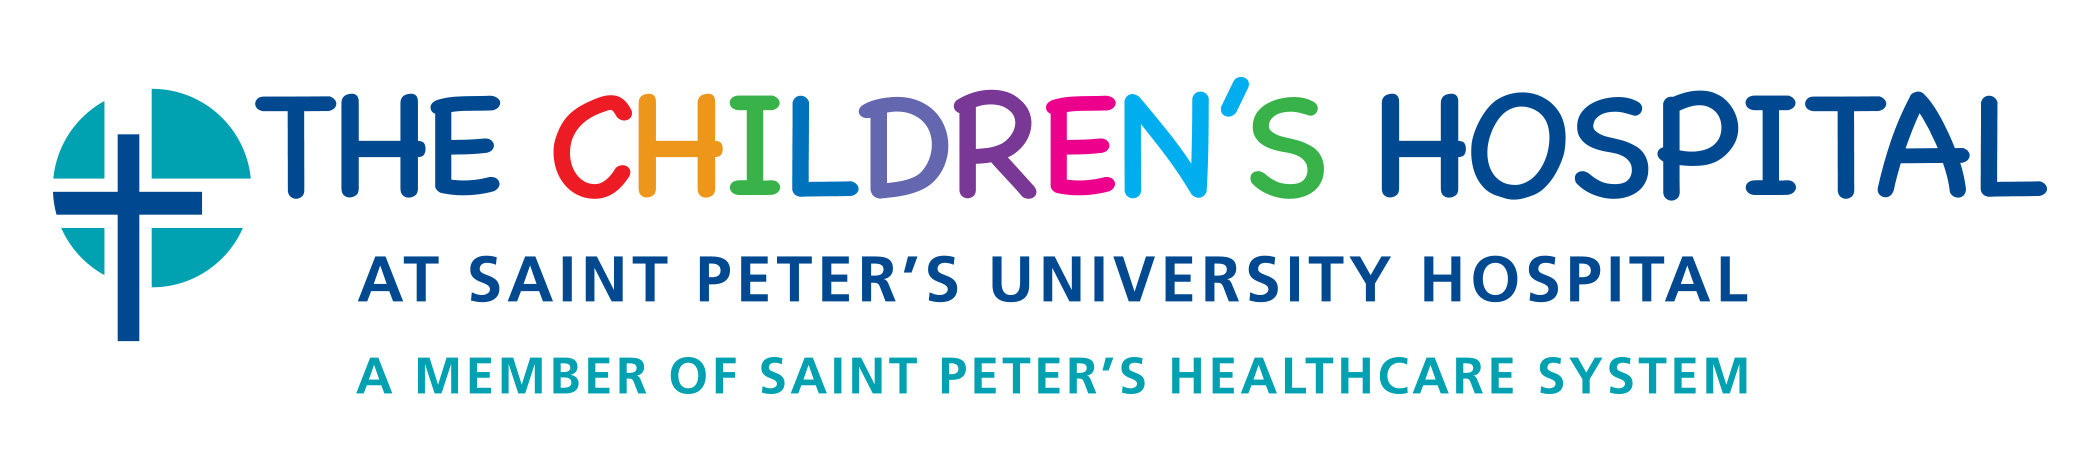 Saint Peters Children's Hospital